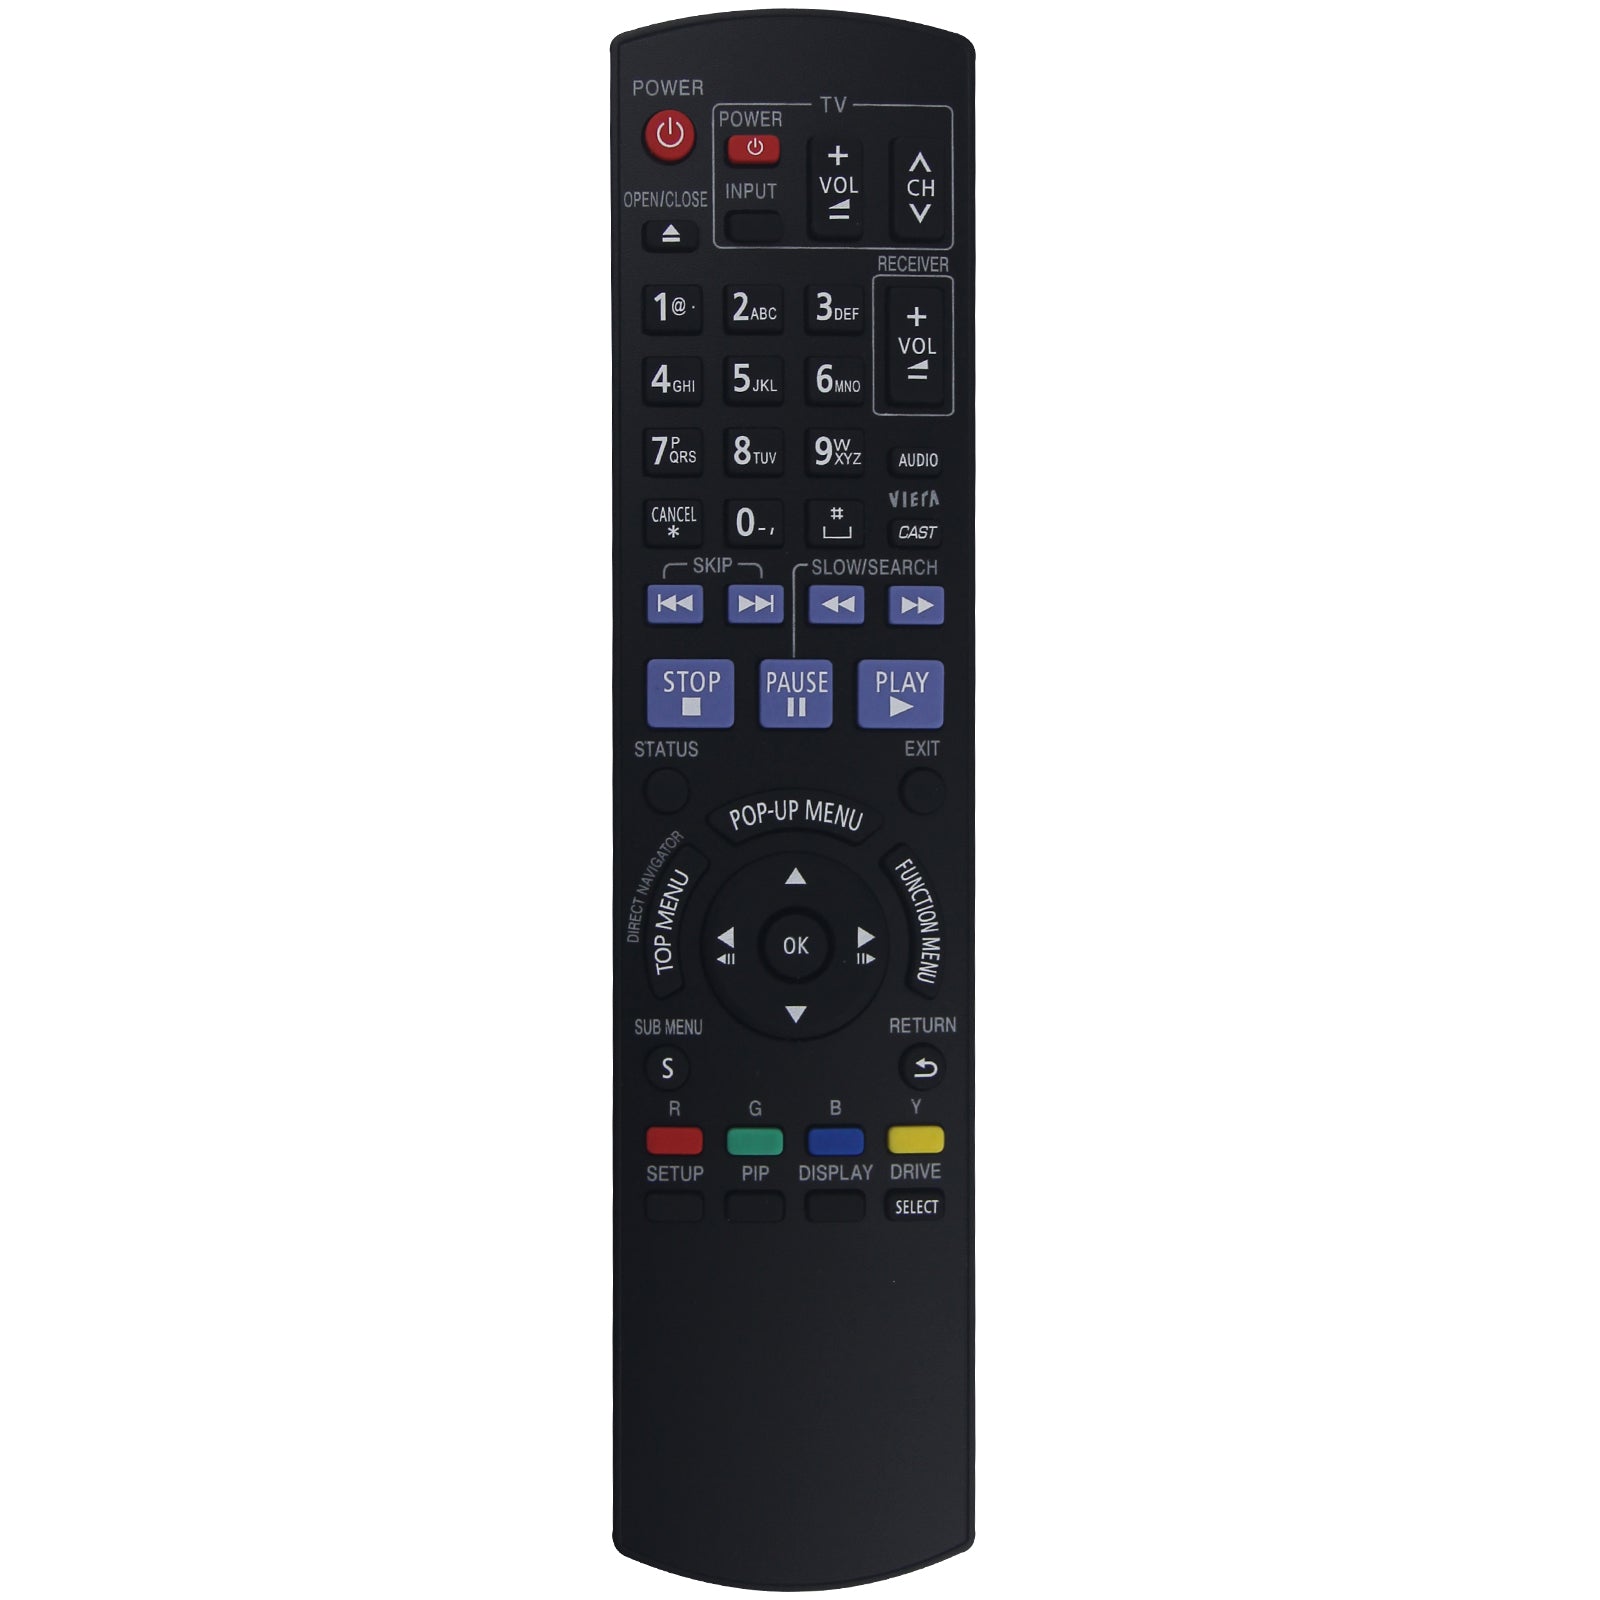 N2QAYB000508 Remote Replacement for Panasonic DVD Blu-Ray BD Player DMP-BD60